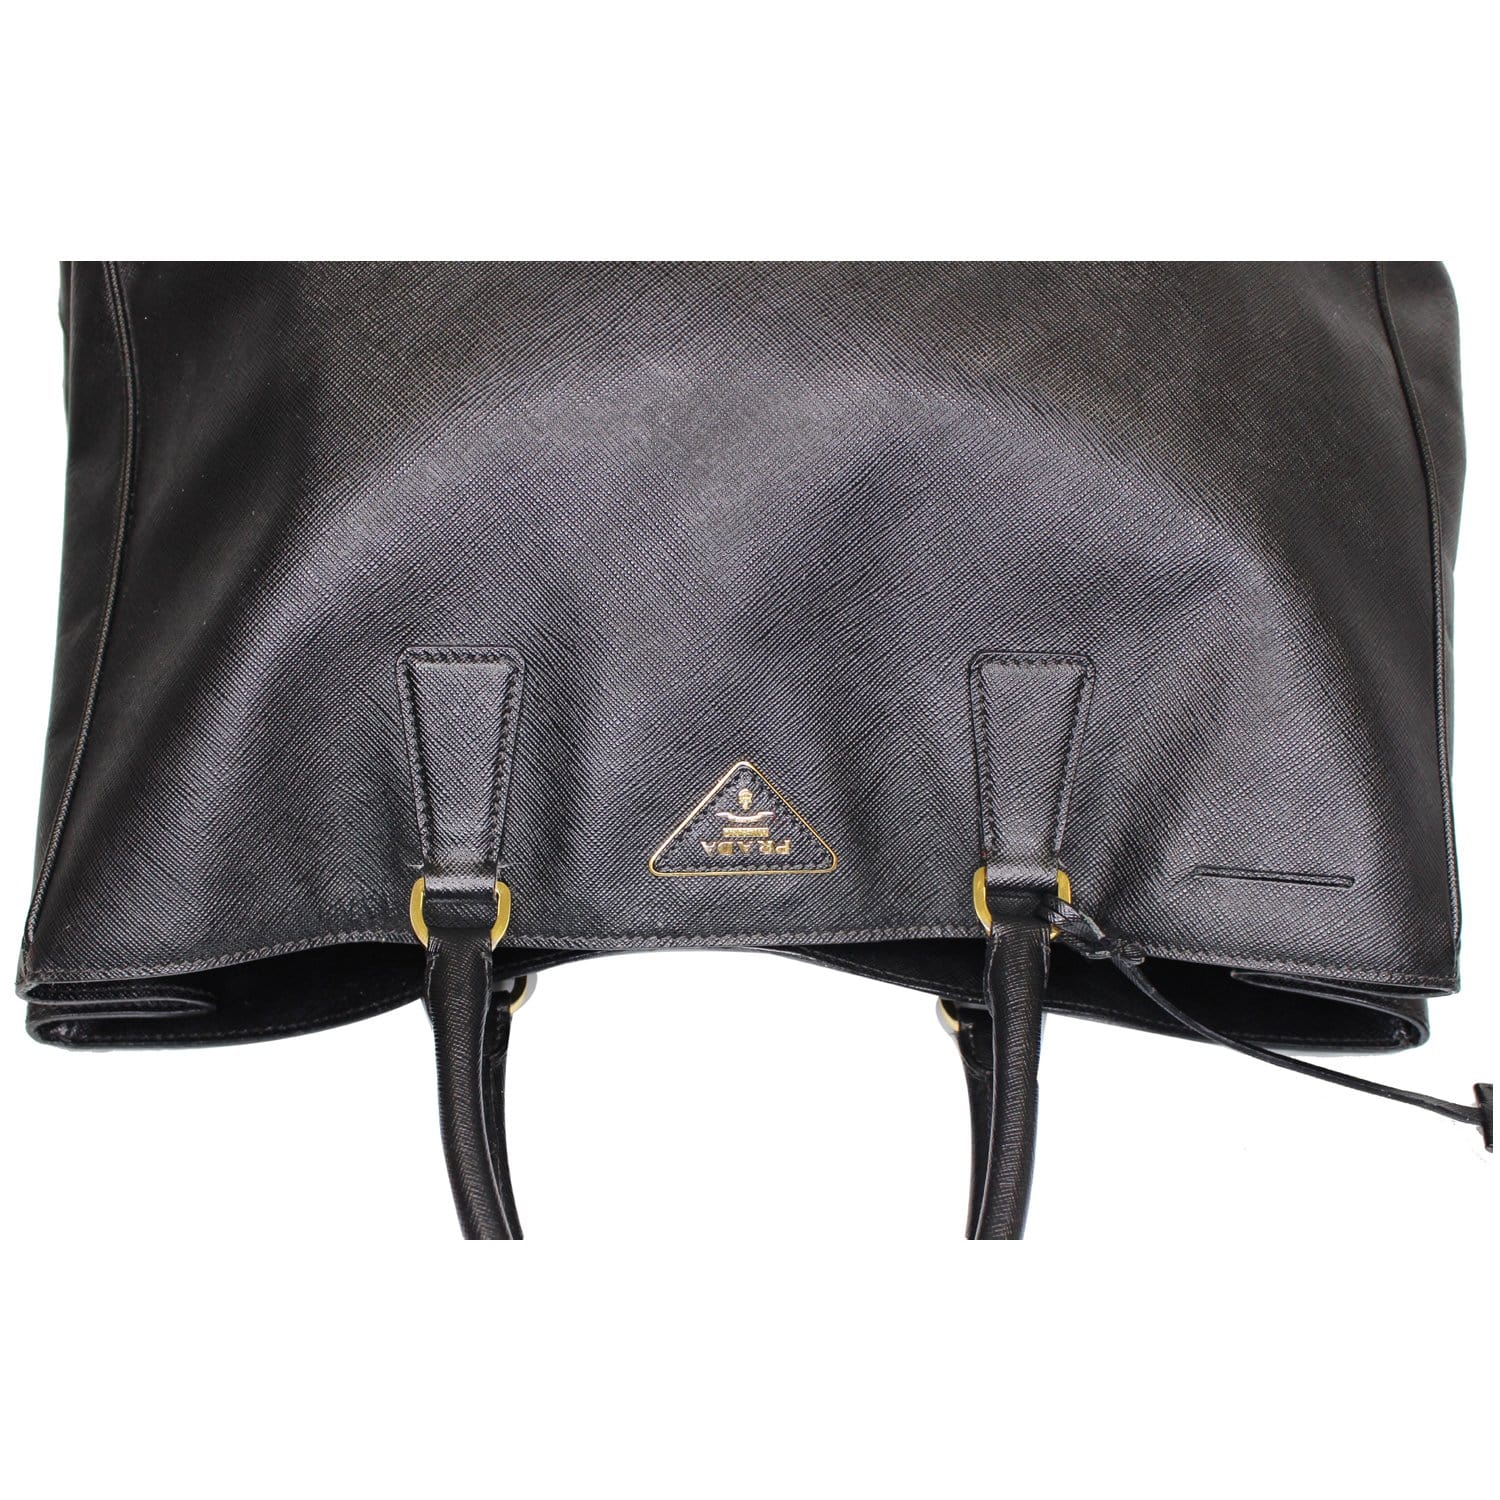 Prada Bag Large Galleria Saffiano Leather Bag With Box 674 (J840